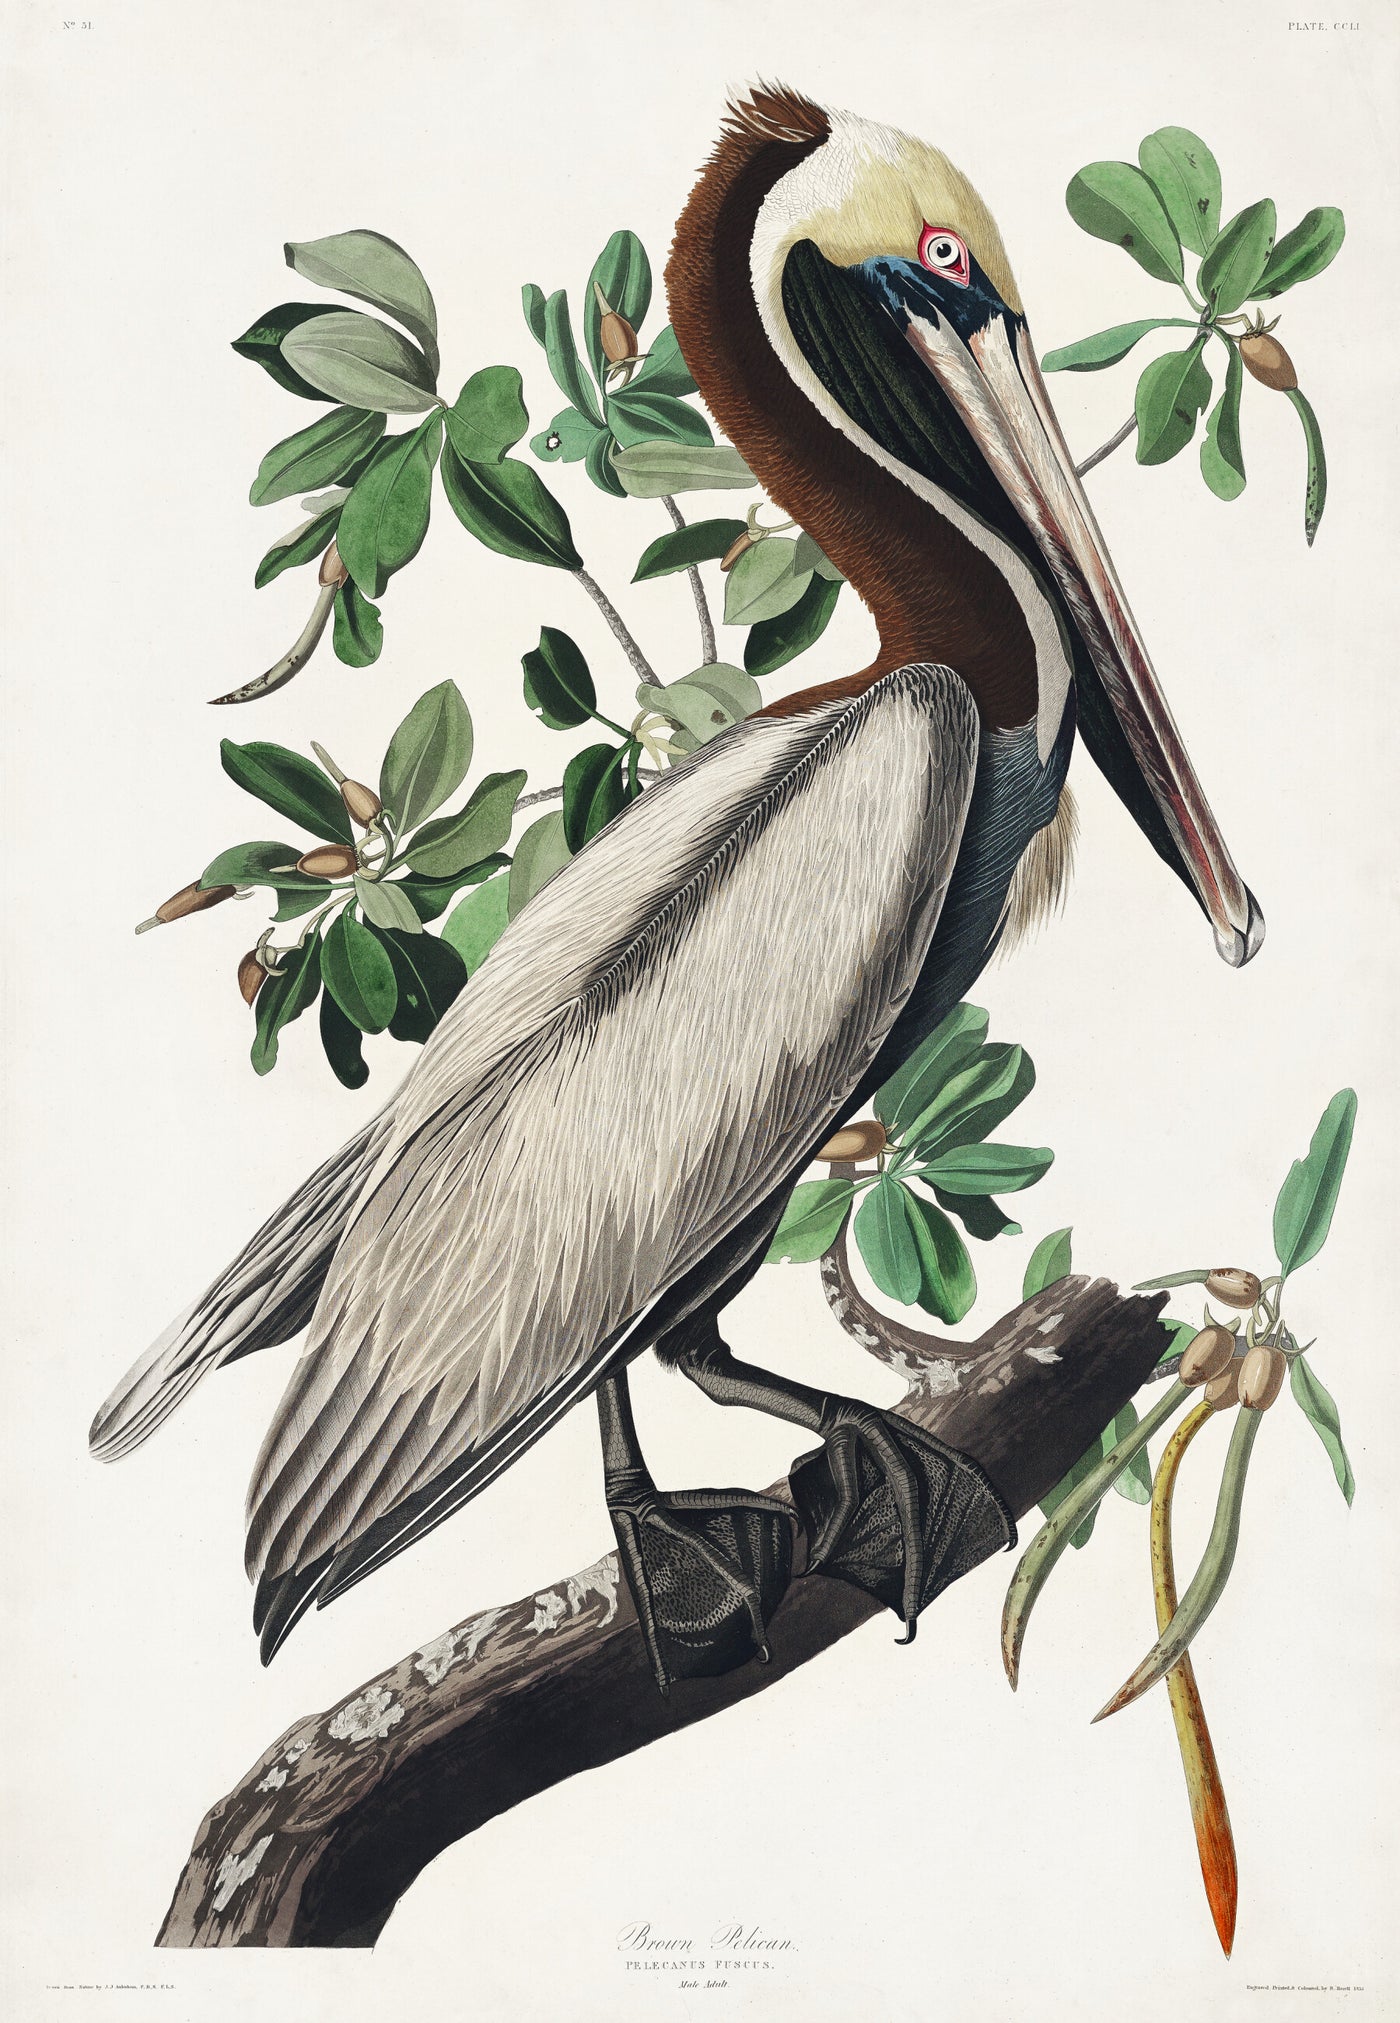 Brauner Pelikan aus Birds of America (1827) von John James Audubon